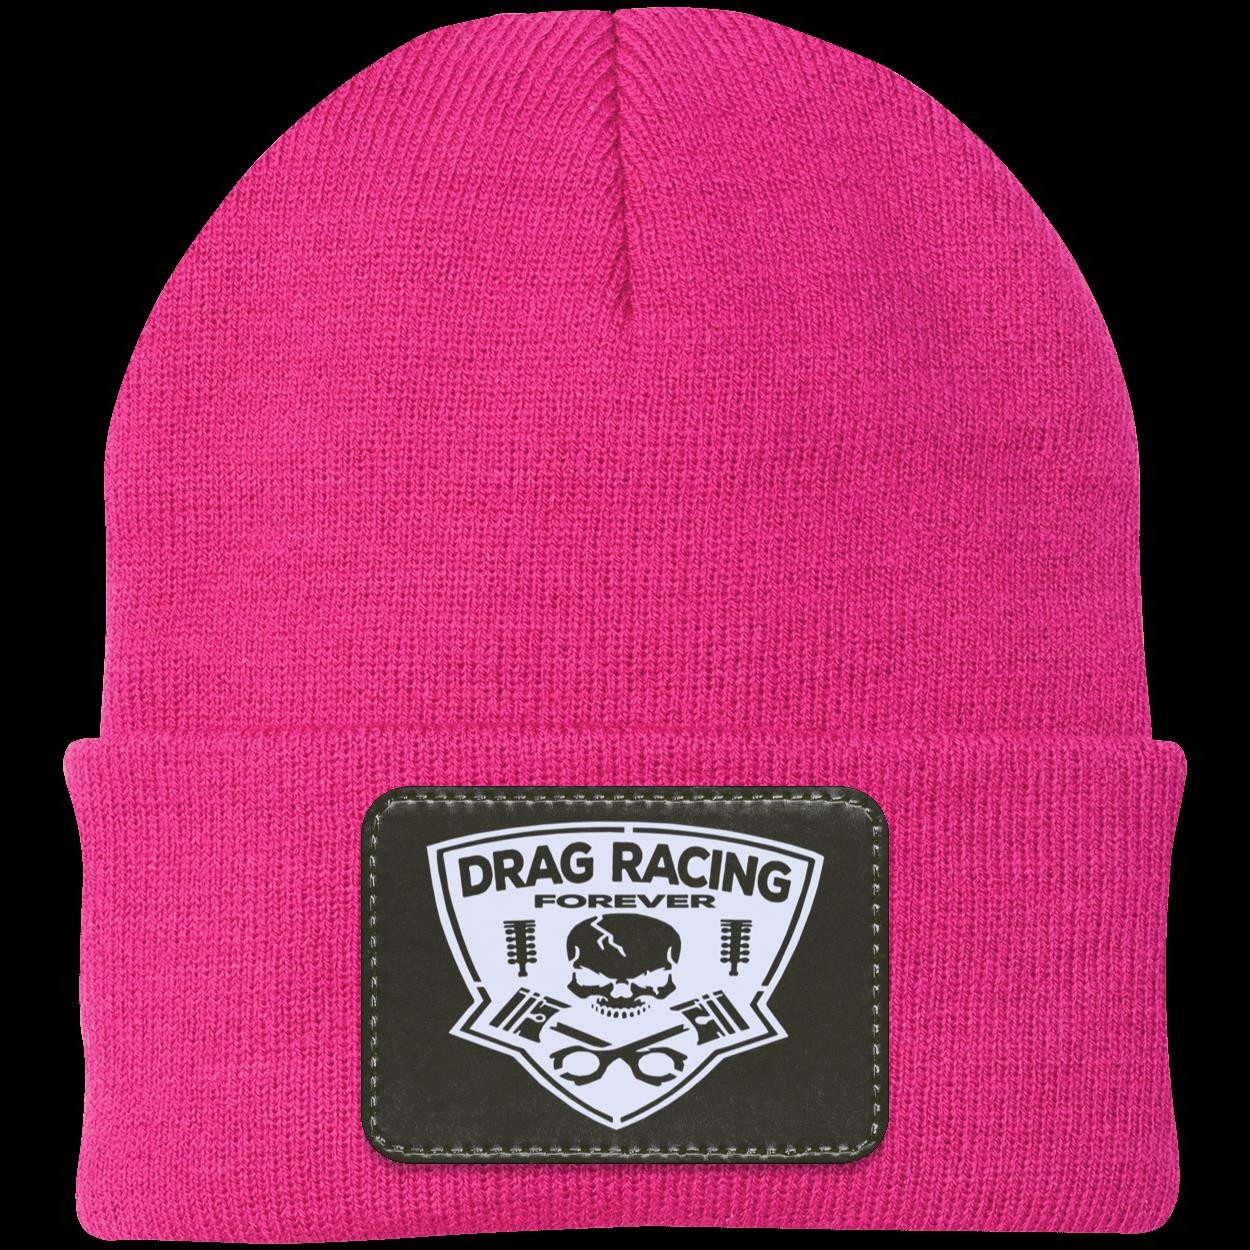 Drag Racing Forever Knit Cap